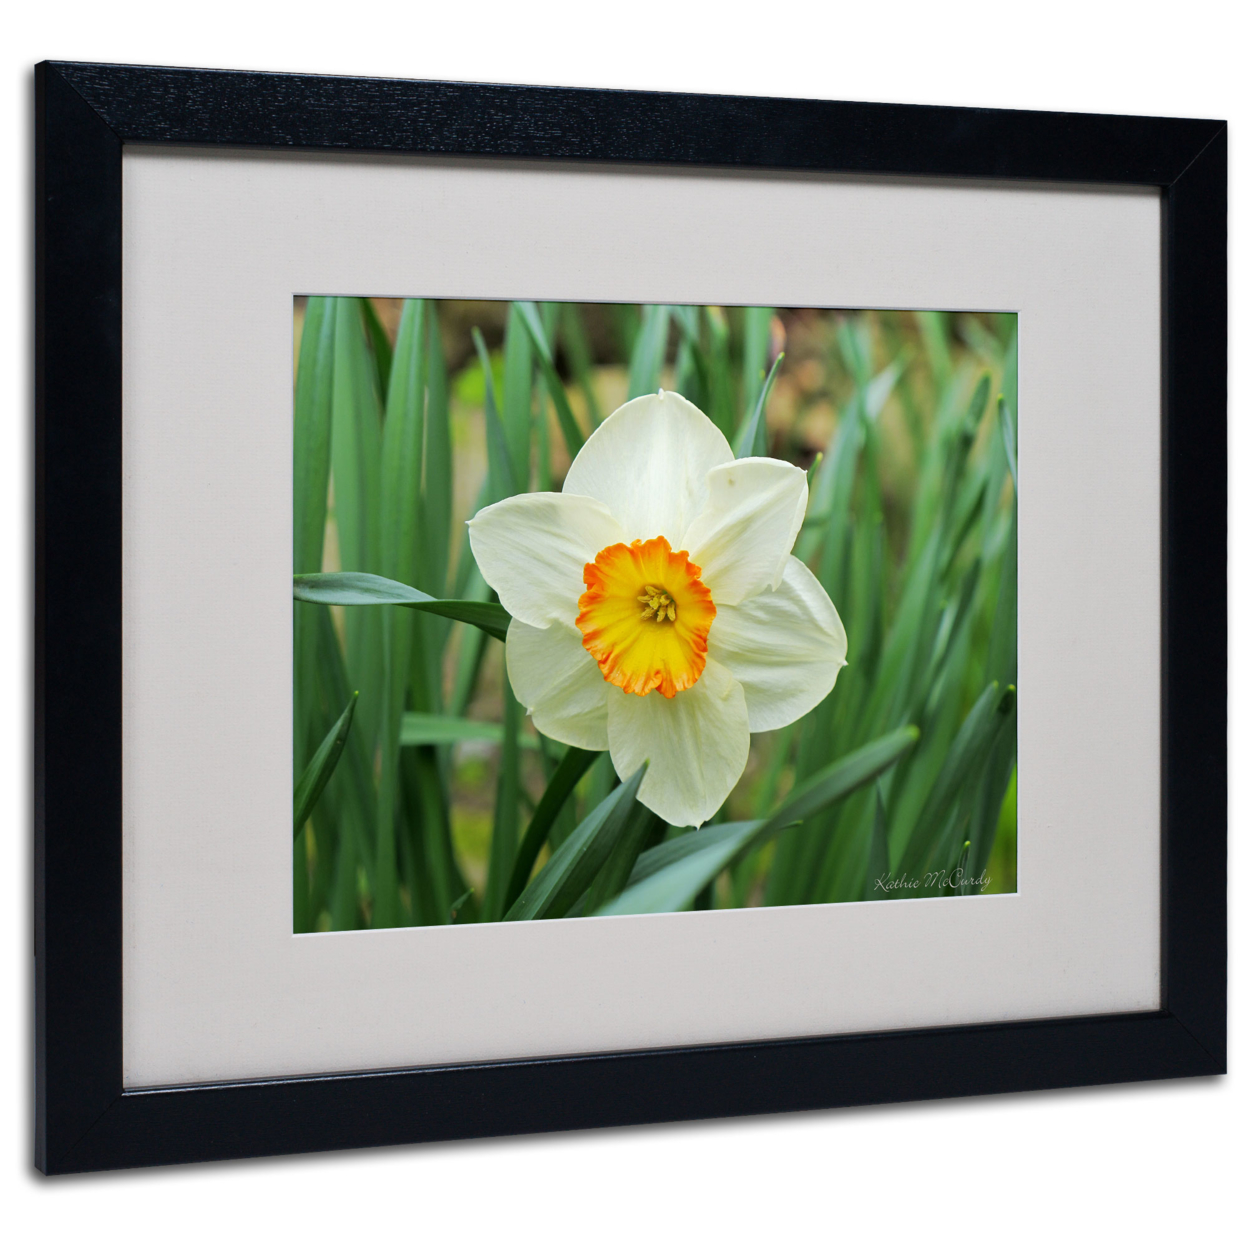 Kathie McCurdy 'Furnace Run Daffodil' Black Wooden Framed Art 18 X 22 Inches